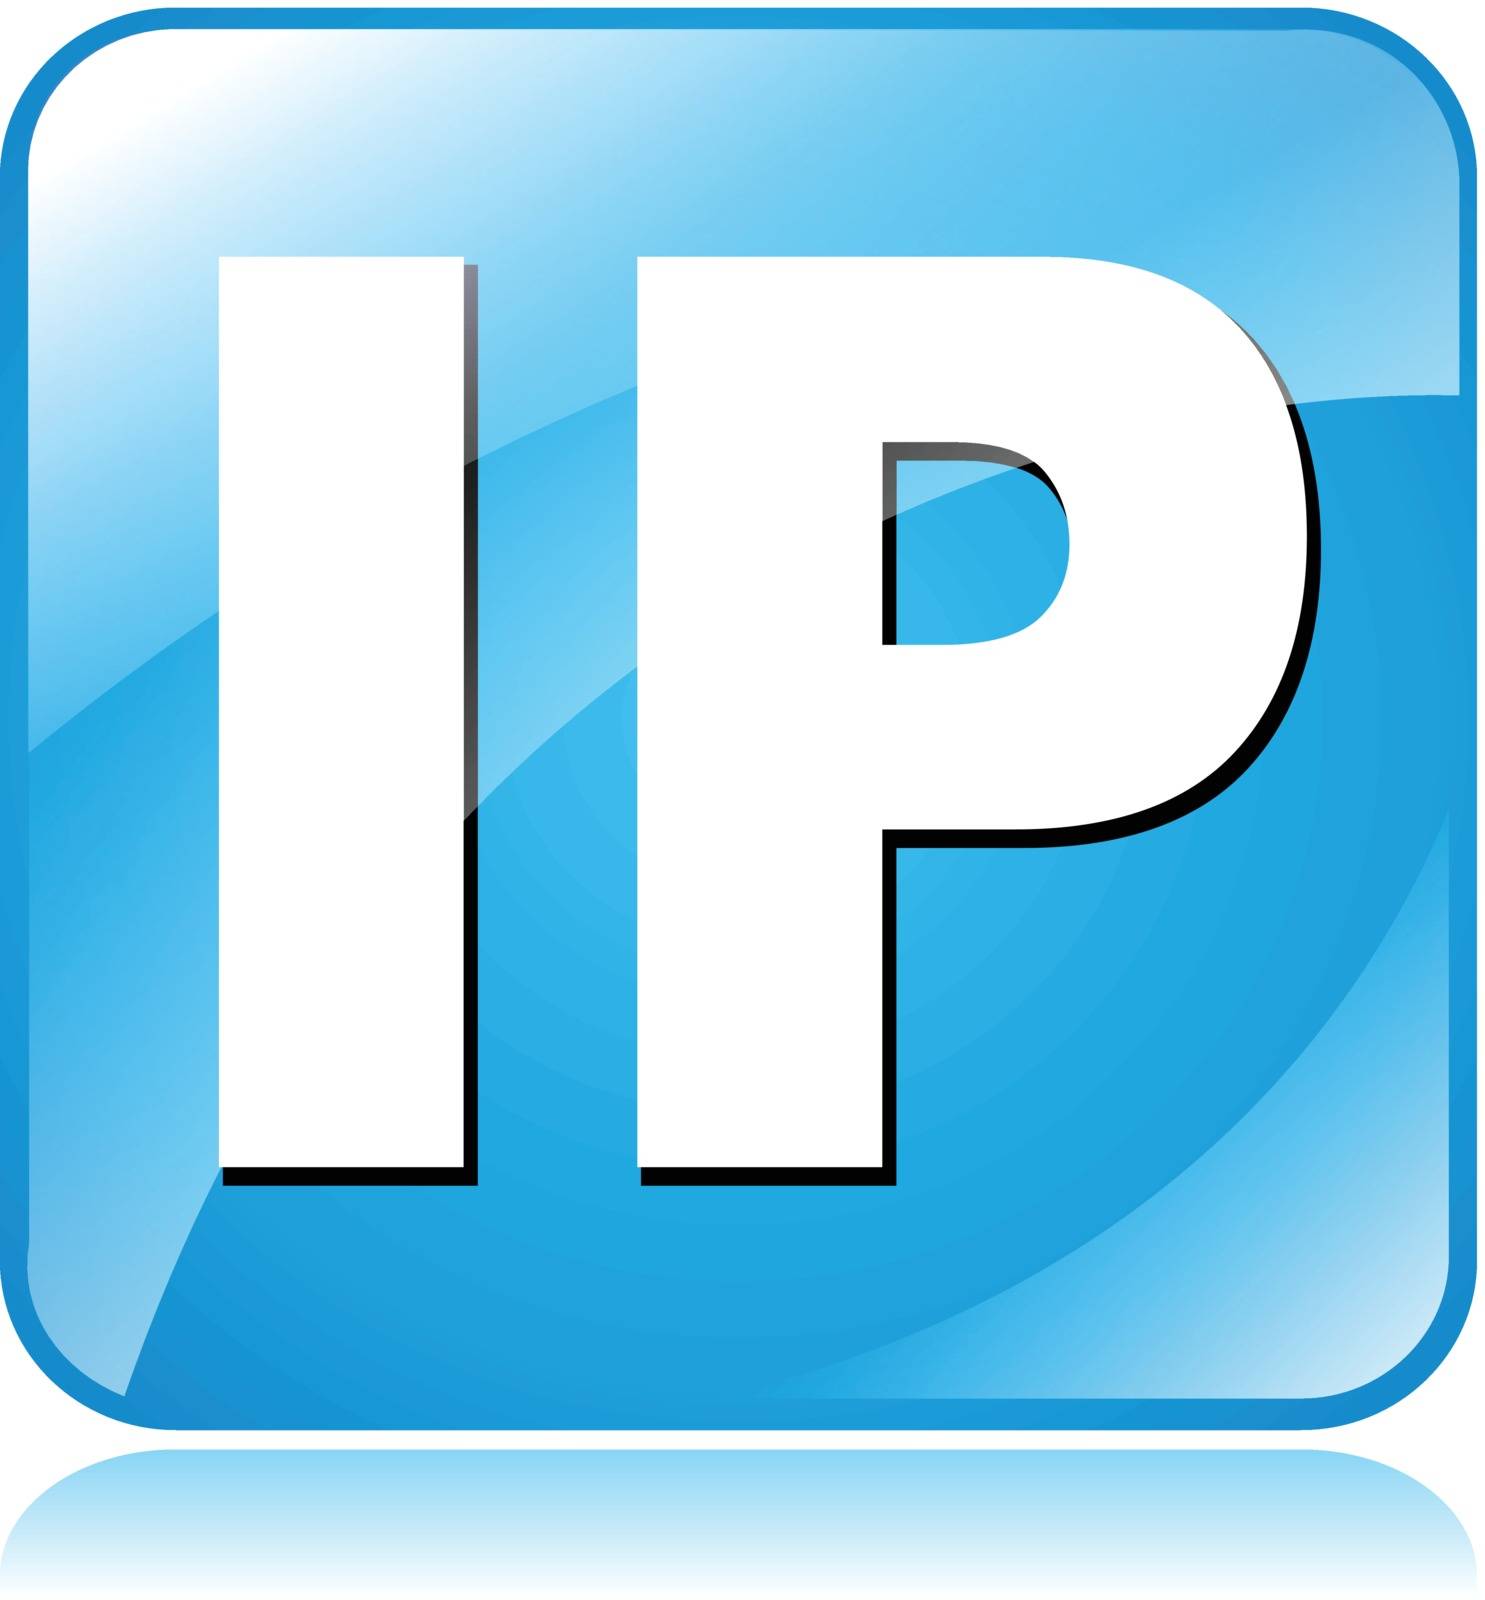 Illustration of blue square design icon for ip address